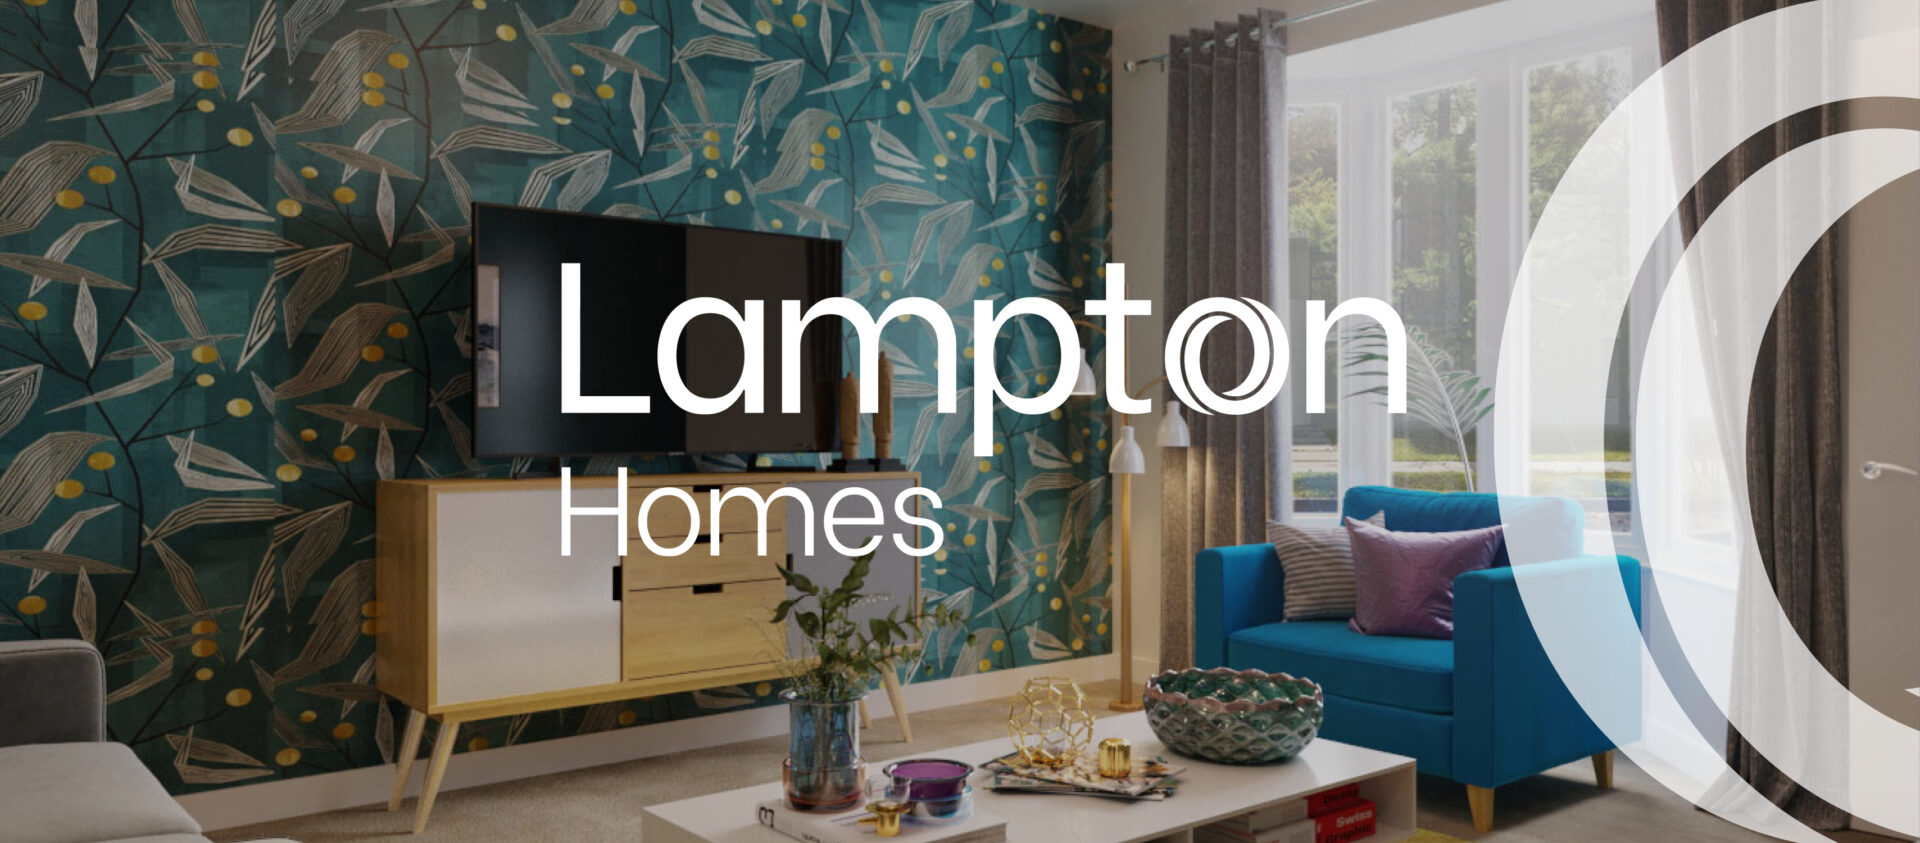 Lampton Homes